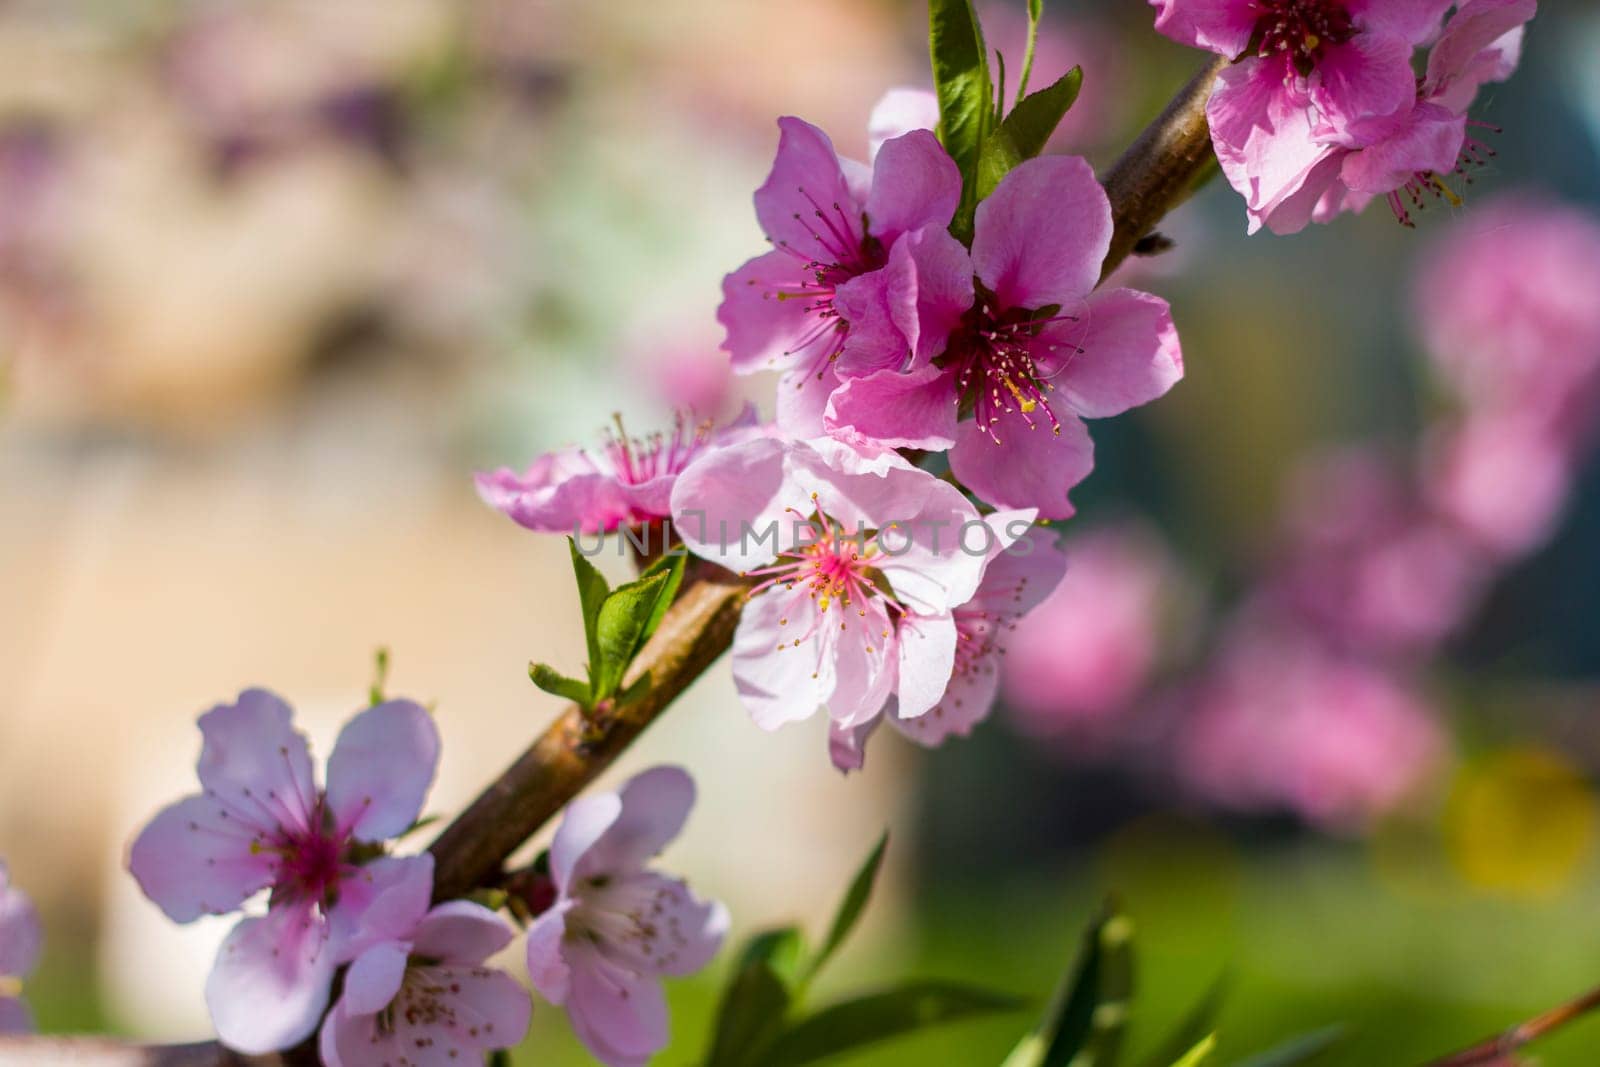 Nectarine peach blossom on sunny day tree. Agriculture beautiful season farming springtime landscape